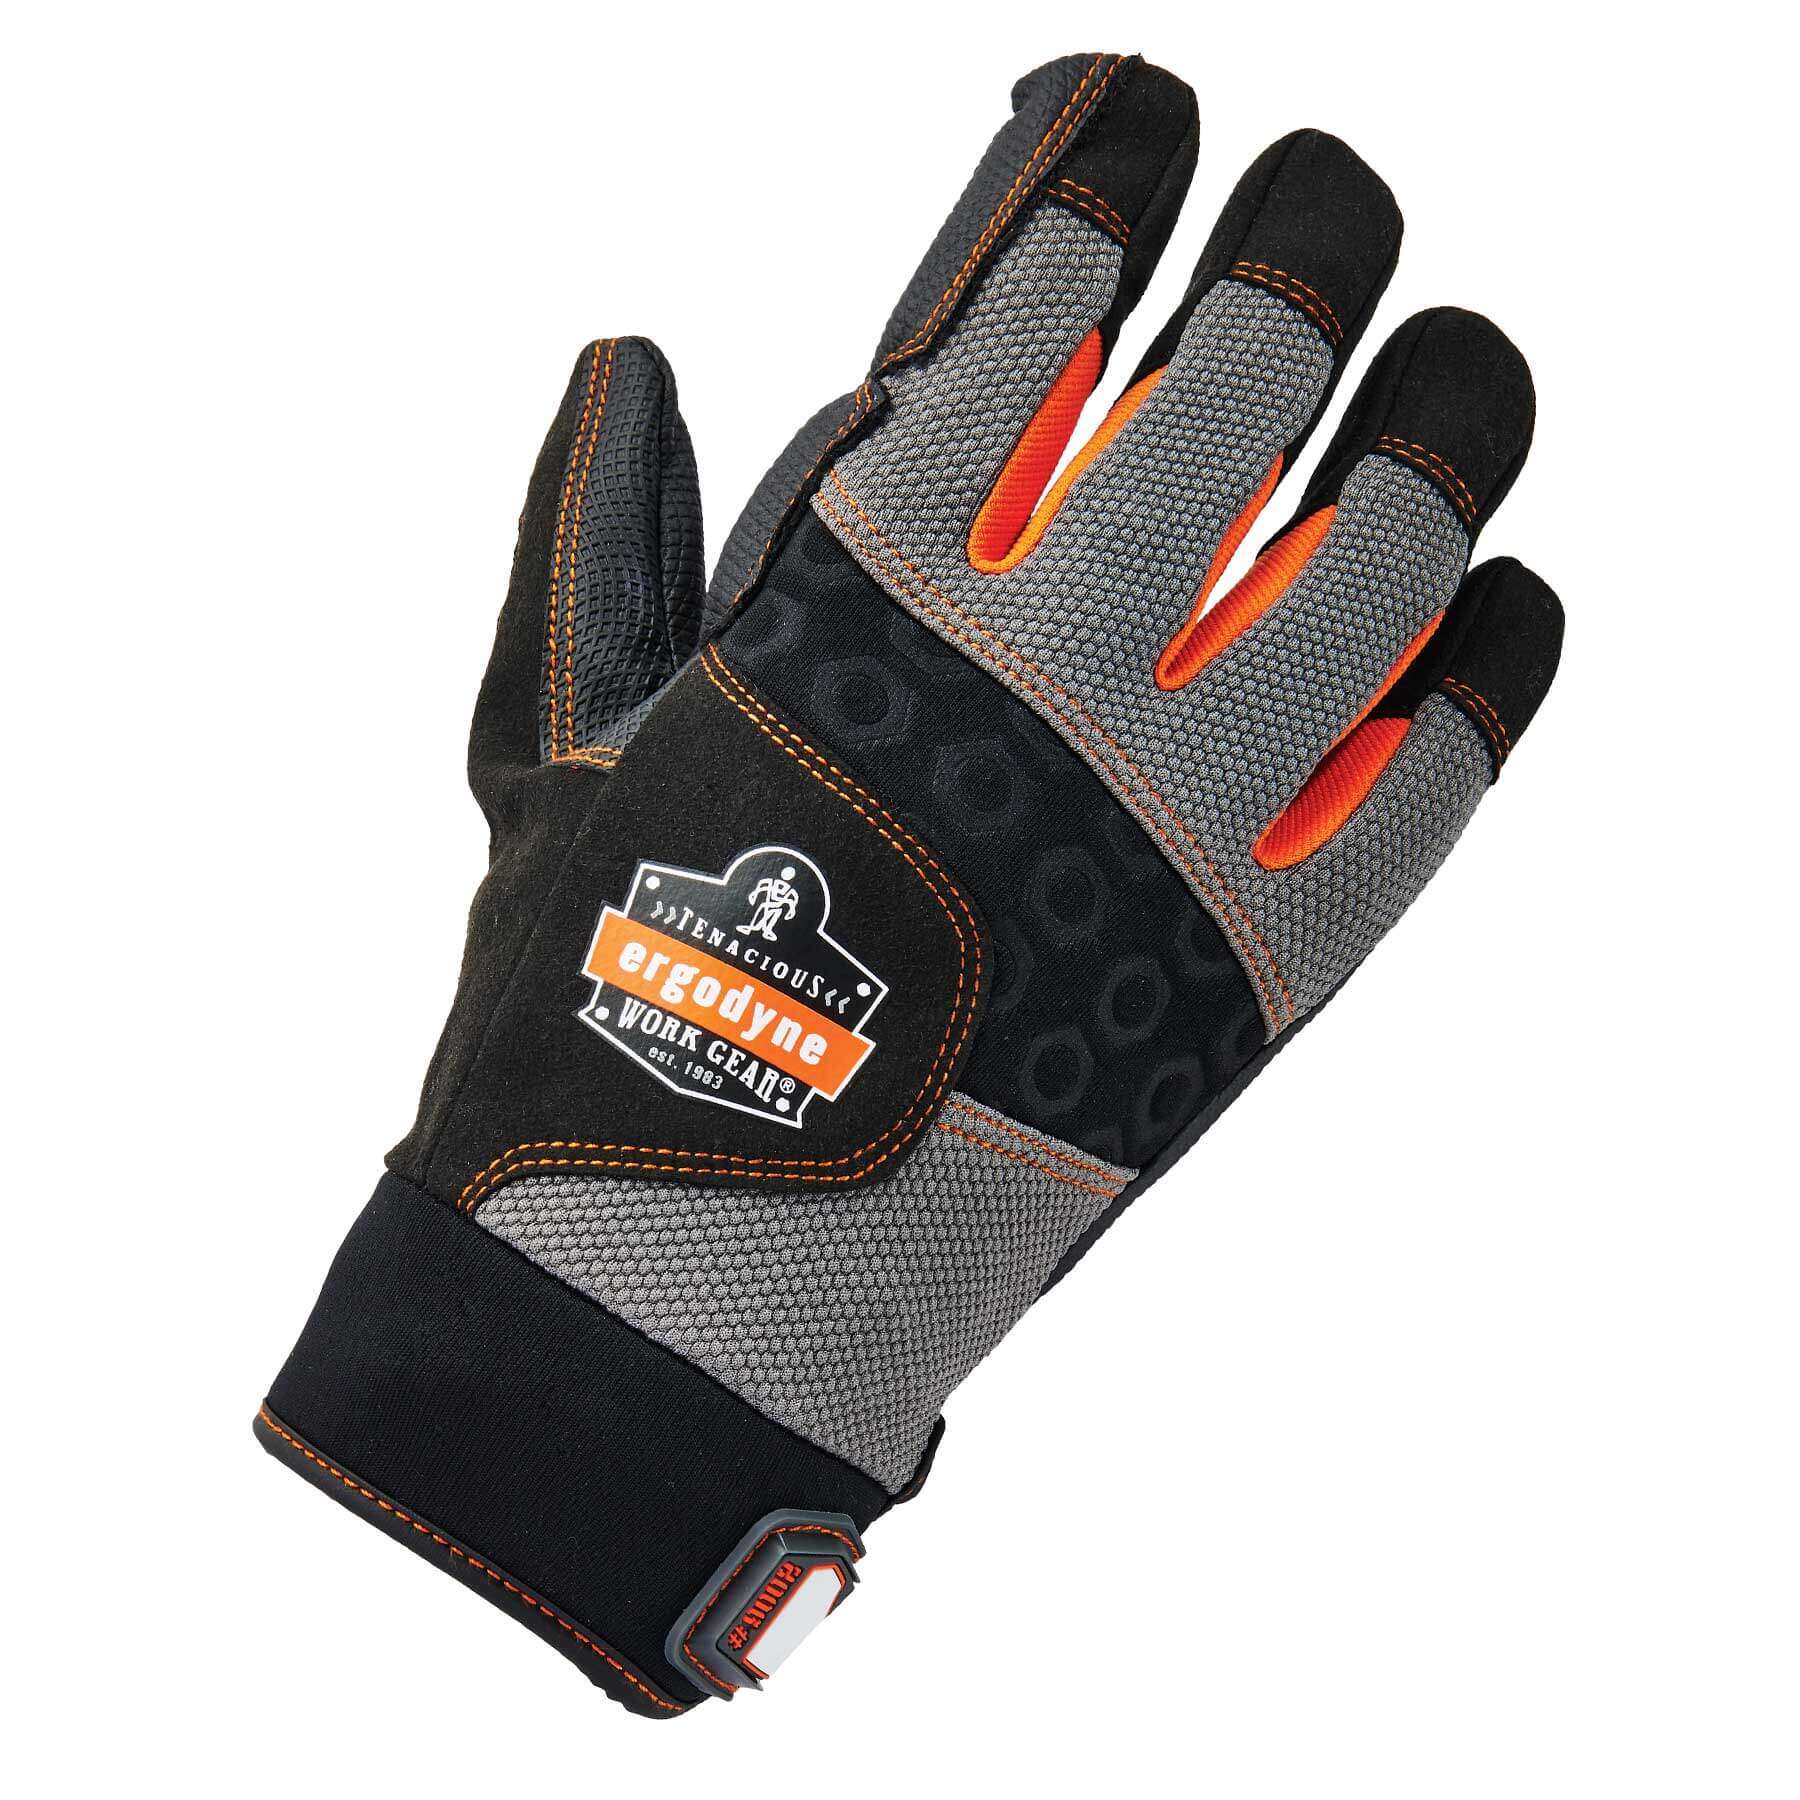 Certified Full-Finger Anti-Vibration Gloves - Anti-Vibration